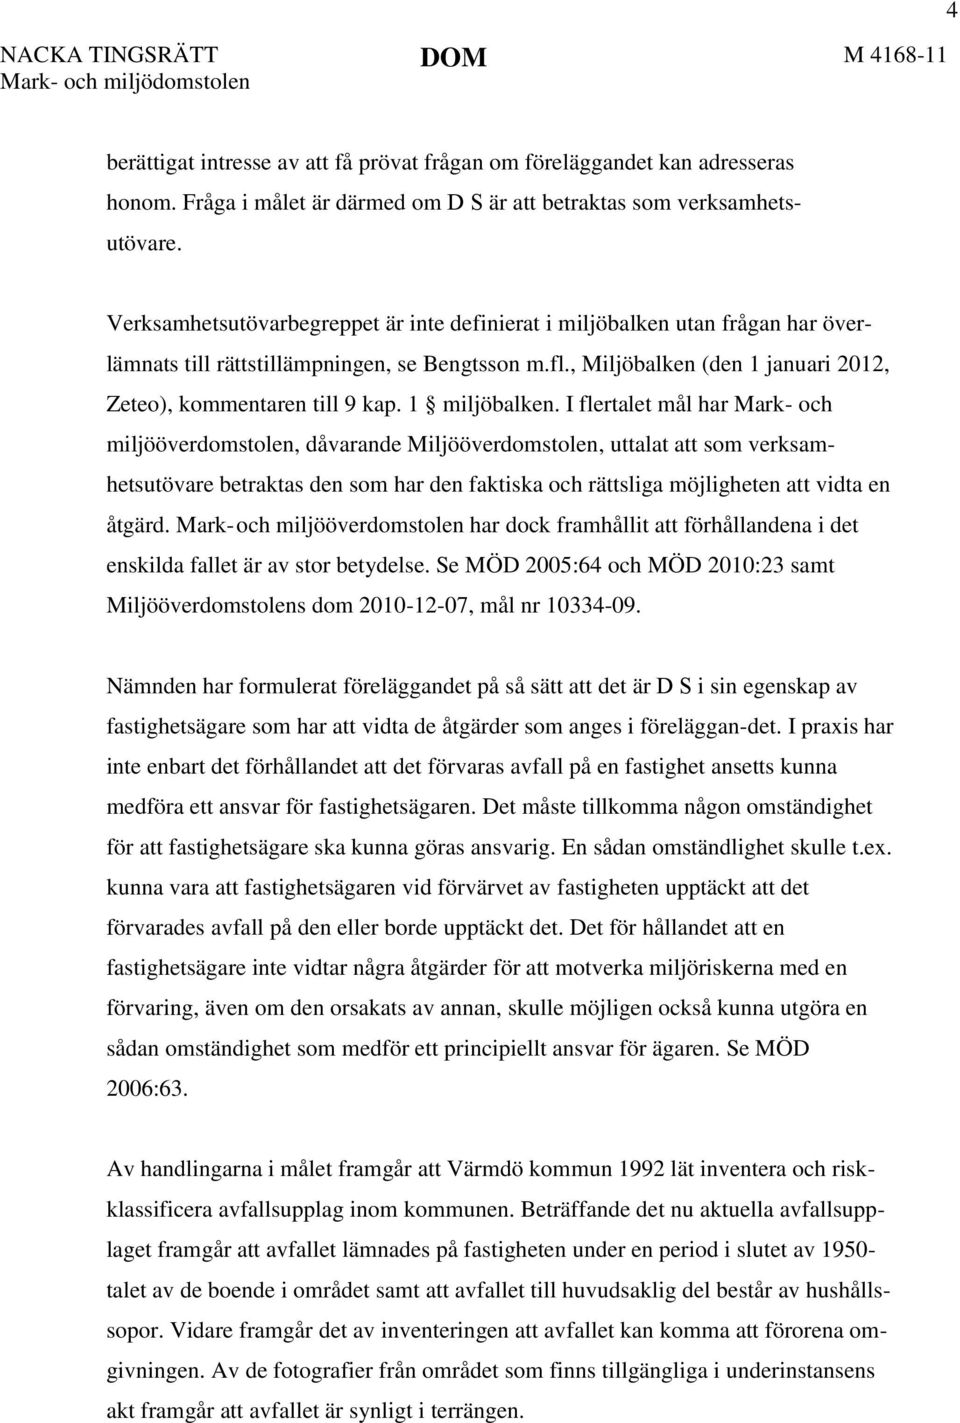 , Miljöbalken (den 1 januari 2012, Zeteo), kommentaren till 9 kap. 1 miljöbalken.